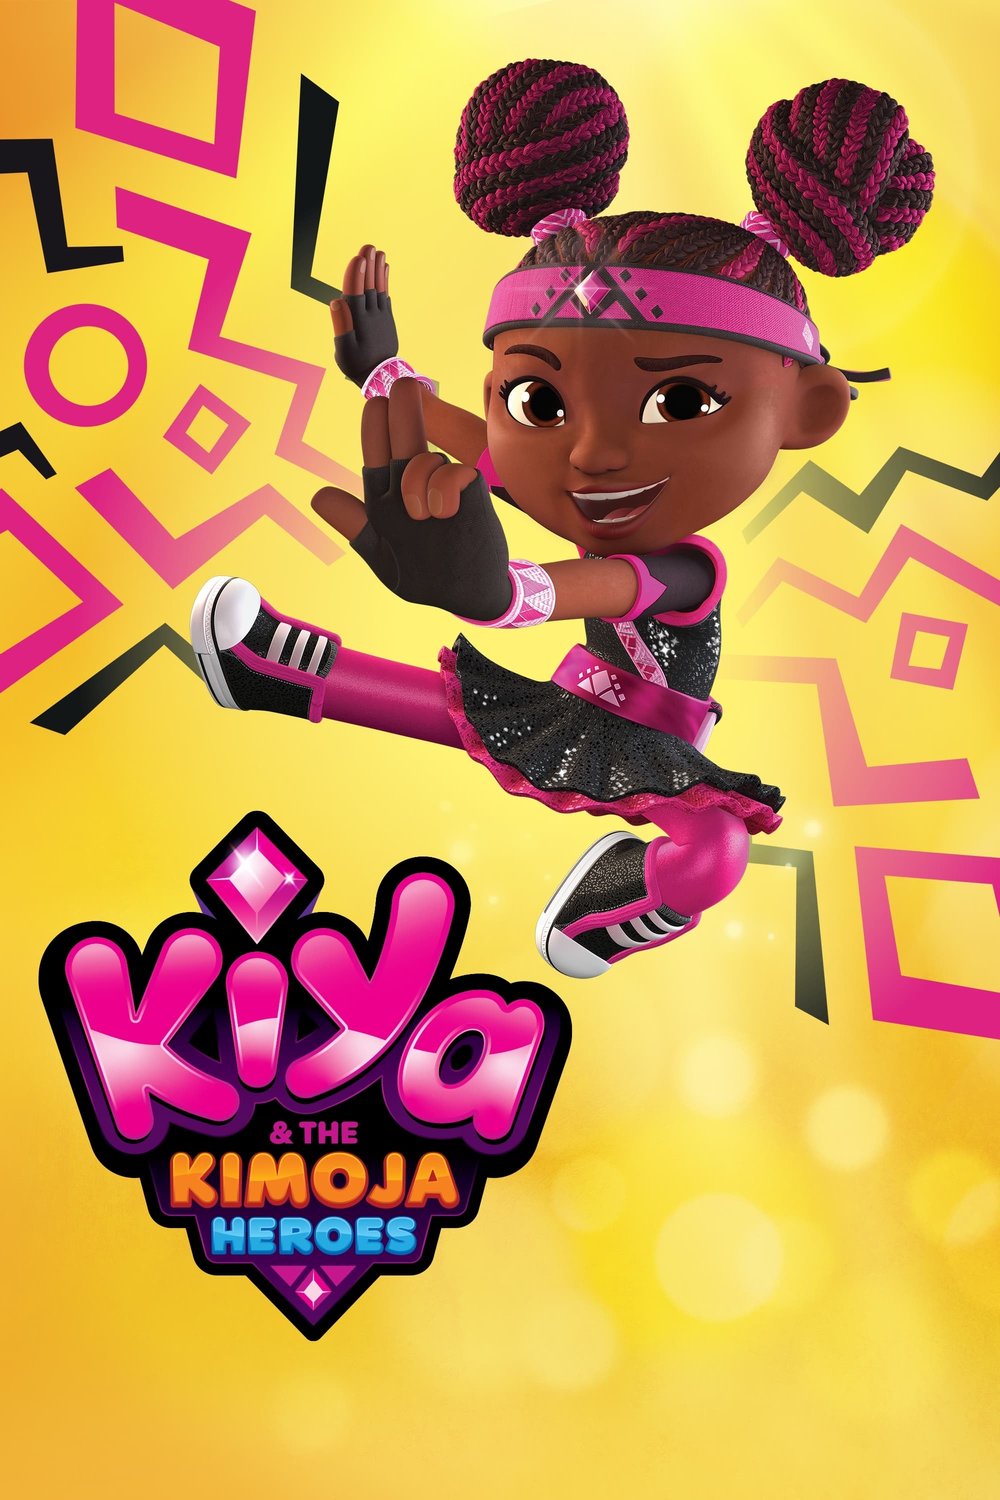 Poster of the movie Kiya & the Kimoja Heroes